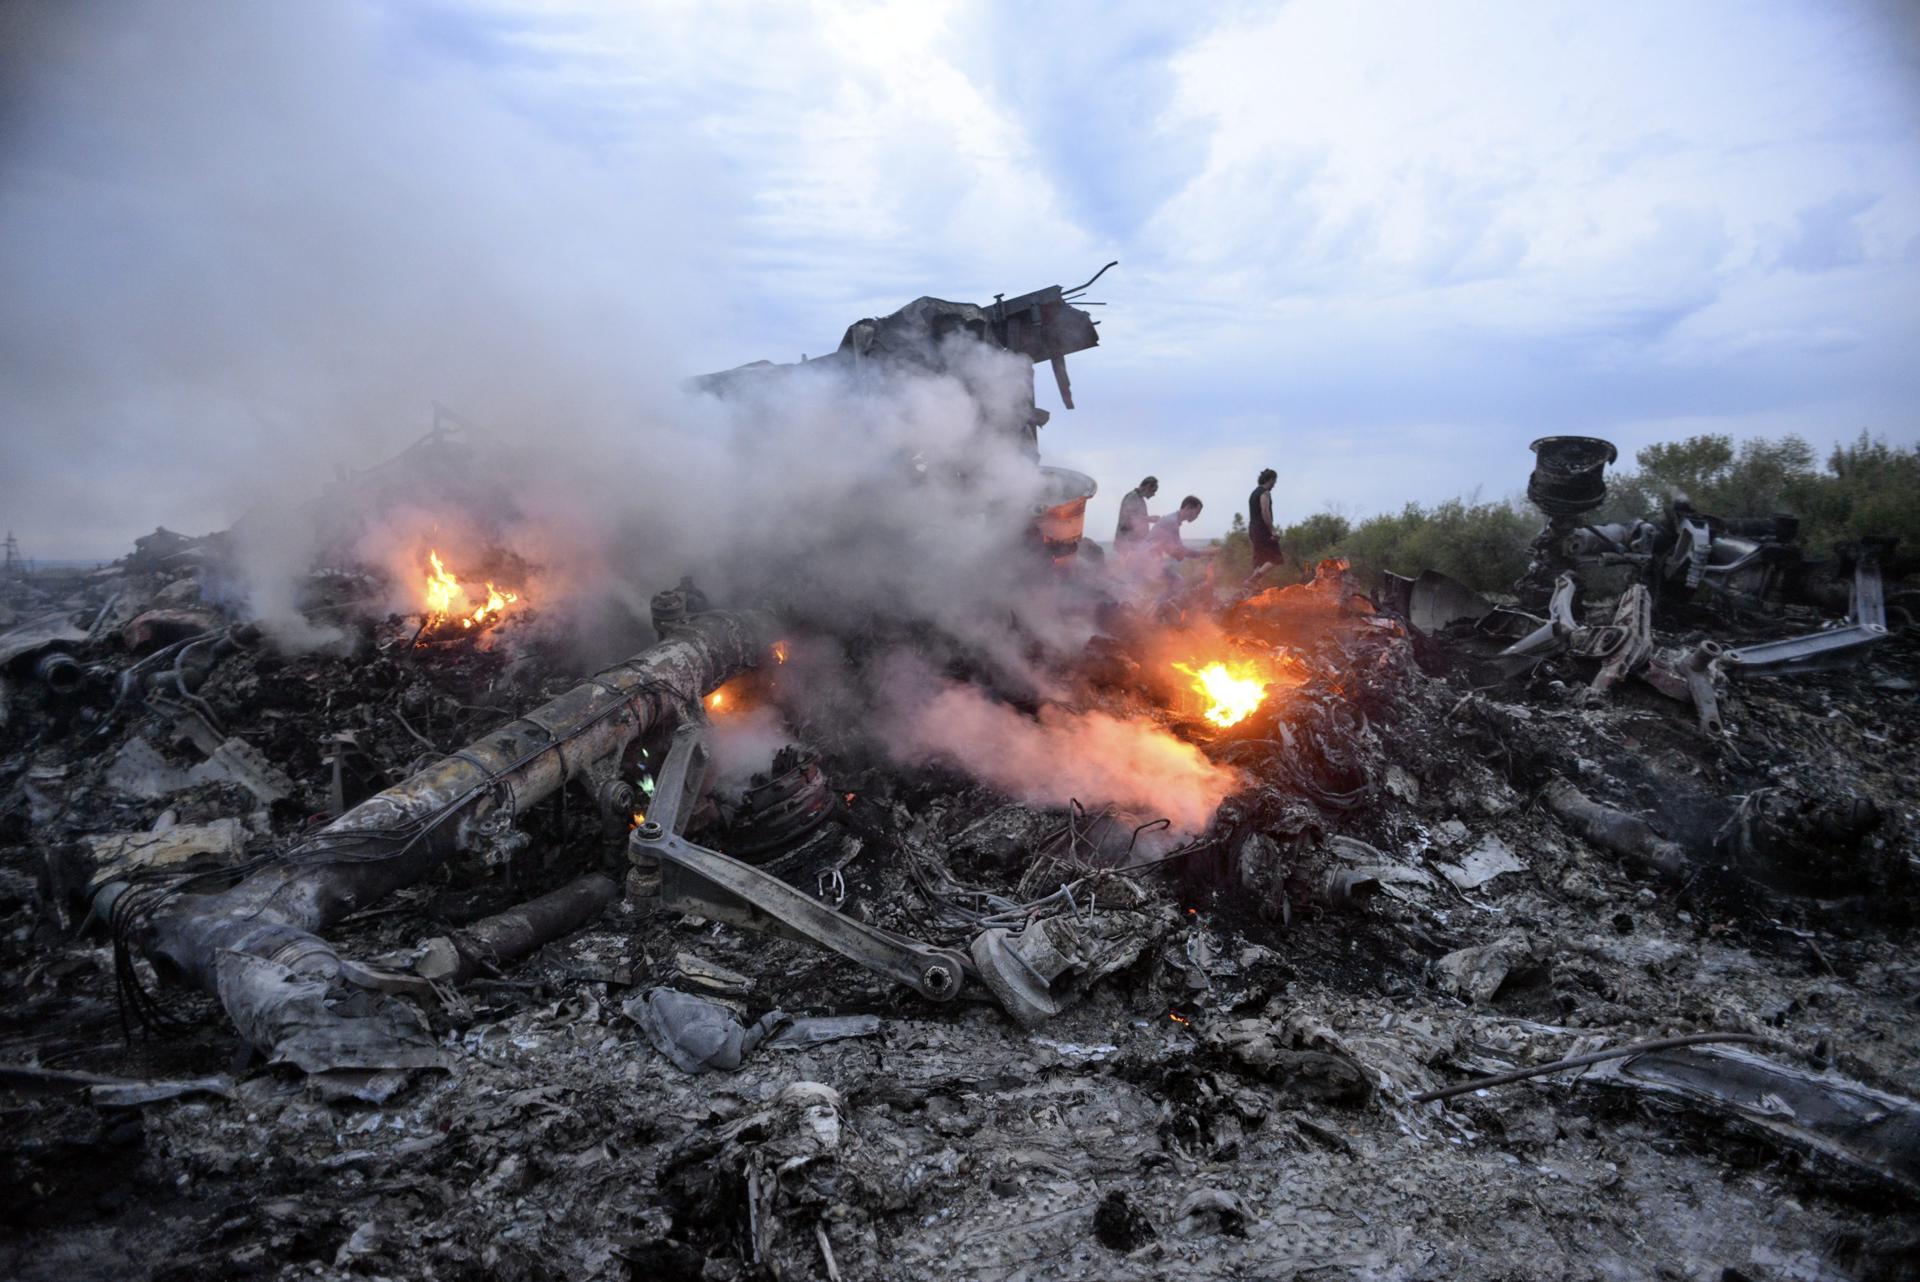 Putin autorizó el misil que derribó el MH17 en Ucrania, pero es inmune